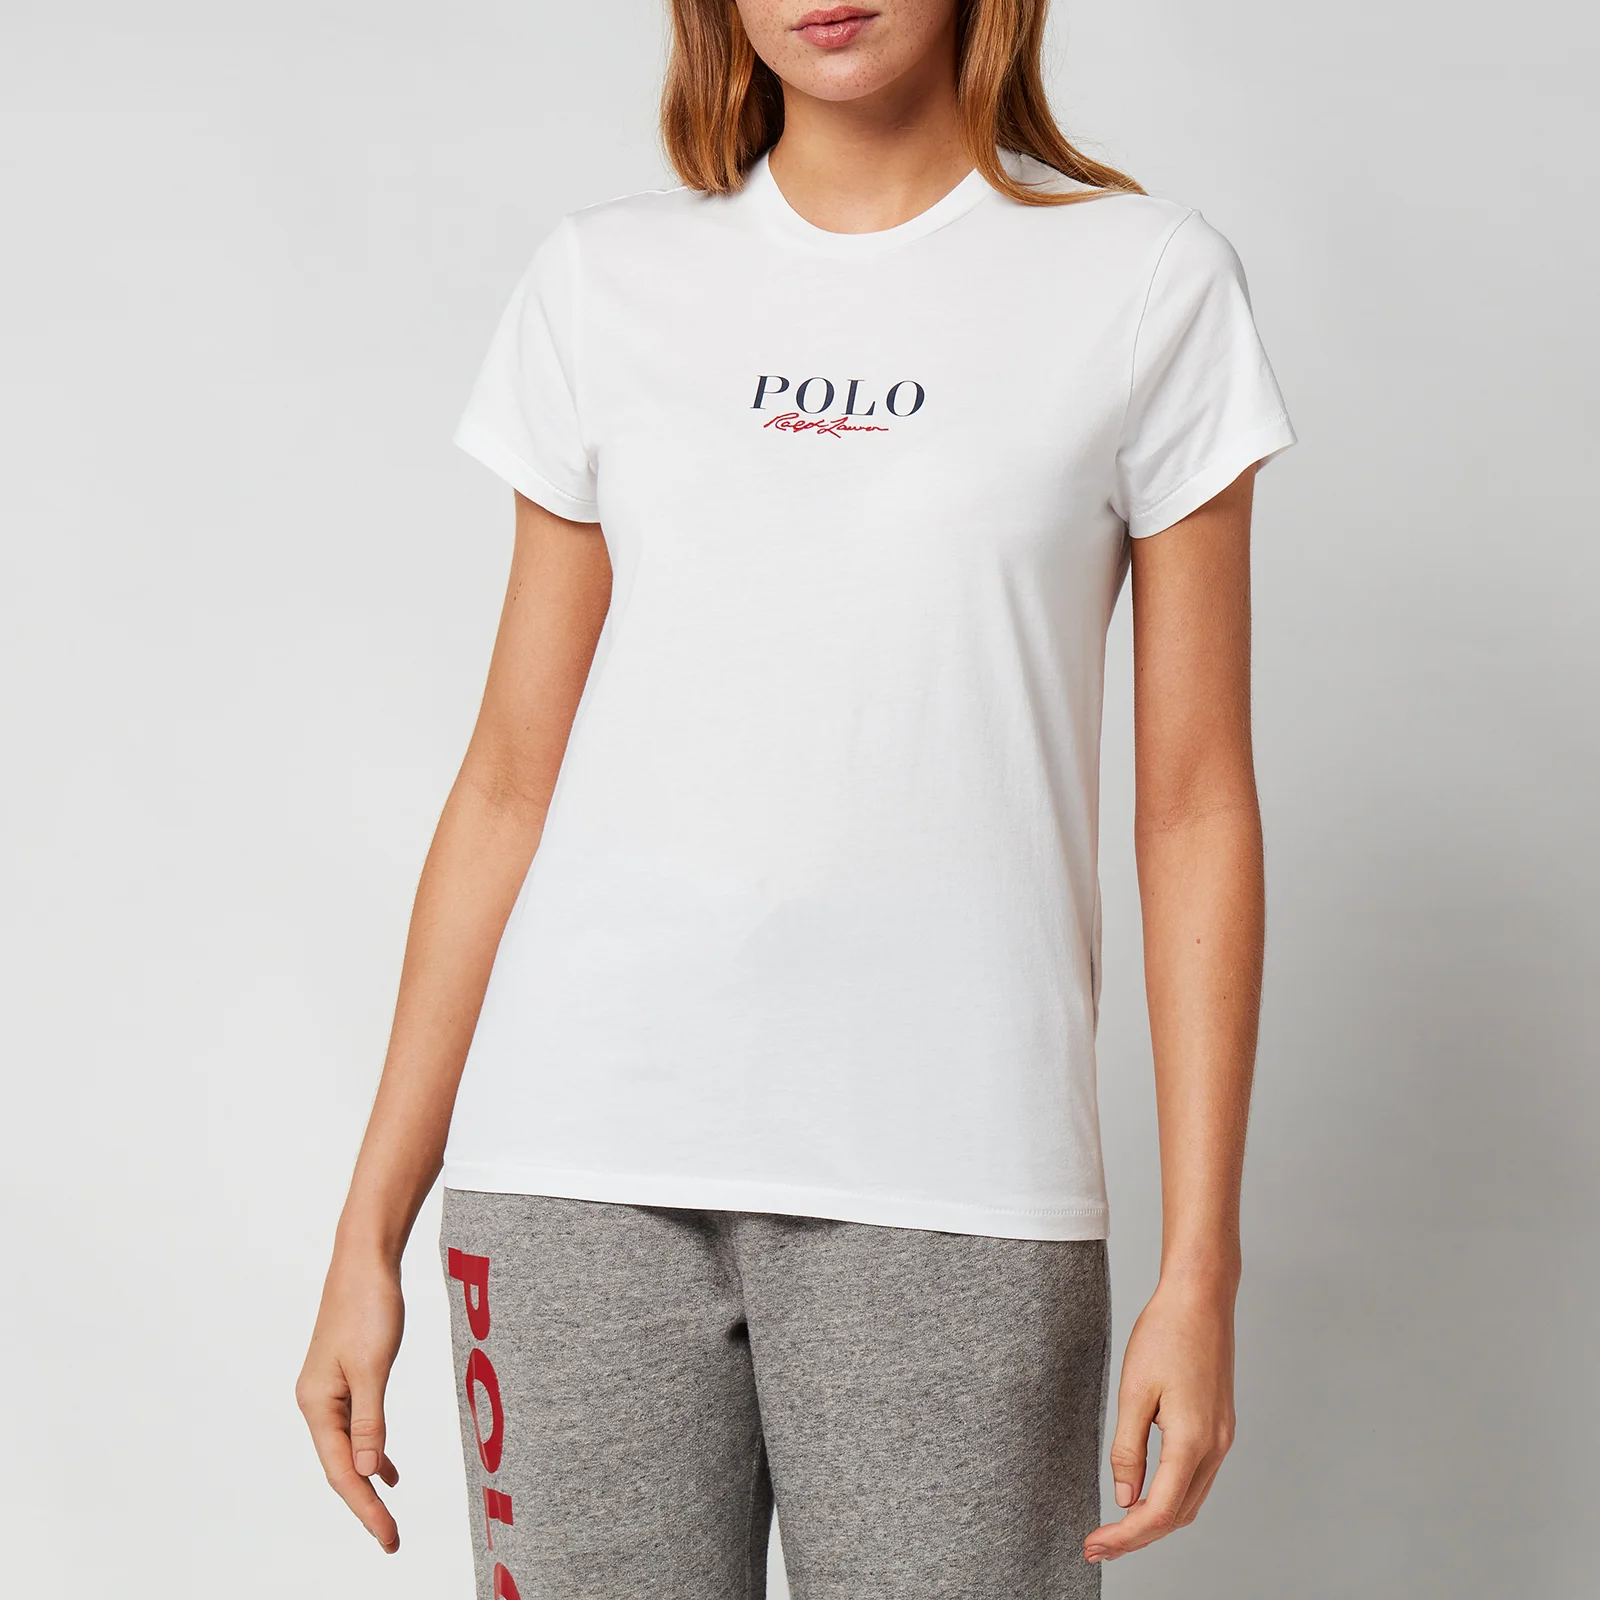 Polo Ralph Lauren Women's Polo Logo T-Shirt - White Image 1